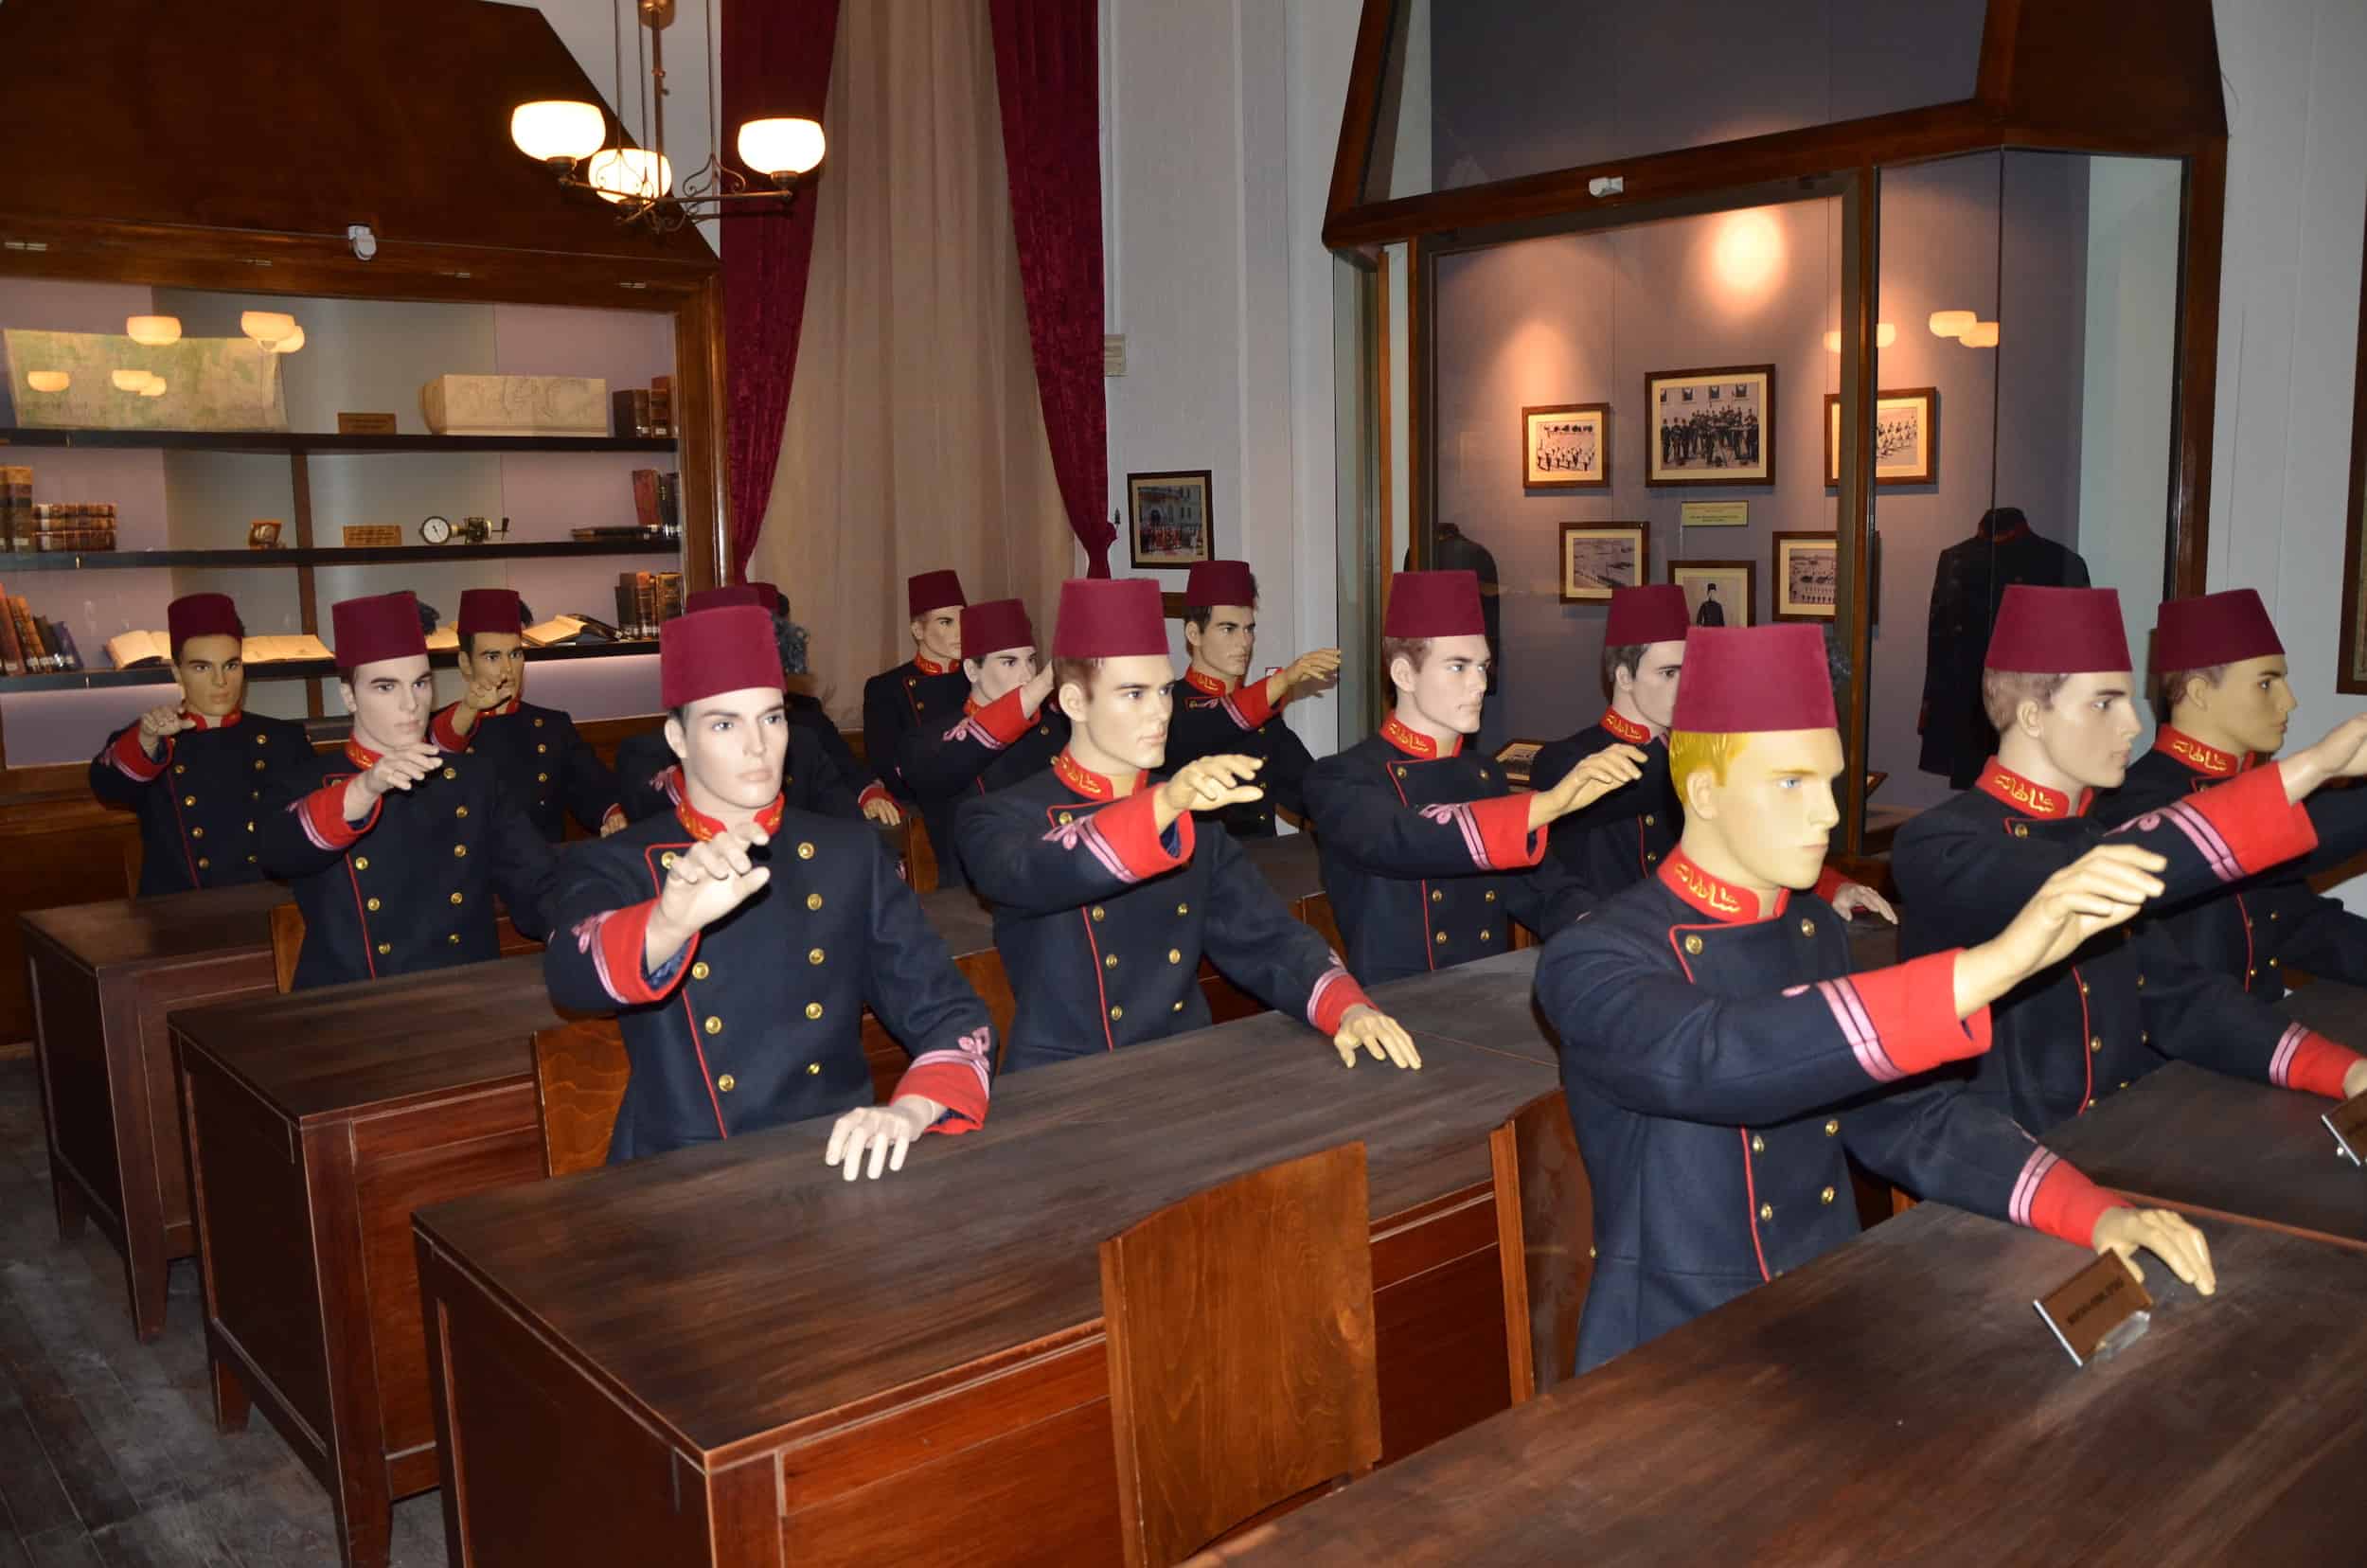 Atatürk's classroom at the Harbiye Military Museum in Istanbul, Turkey